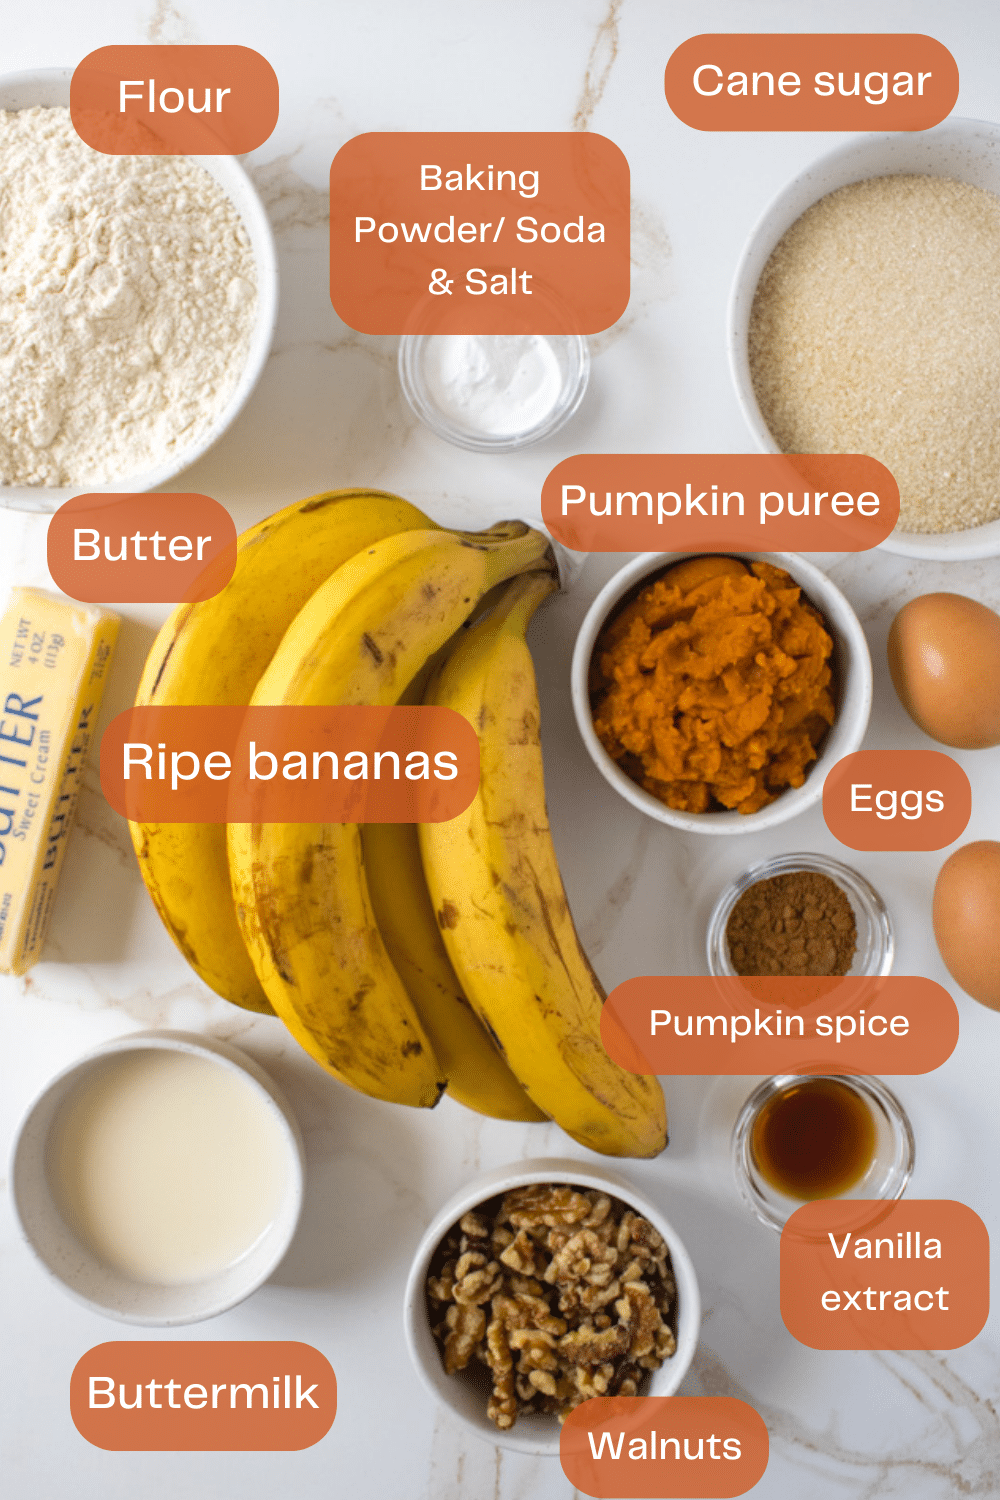 Banana bread ingredients infographic.